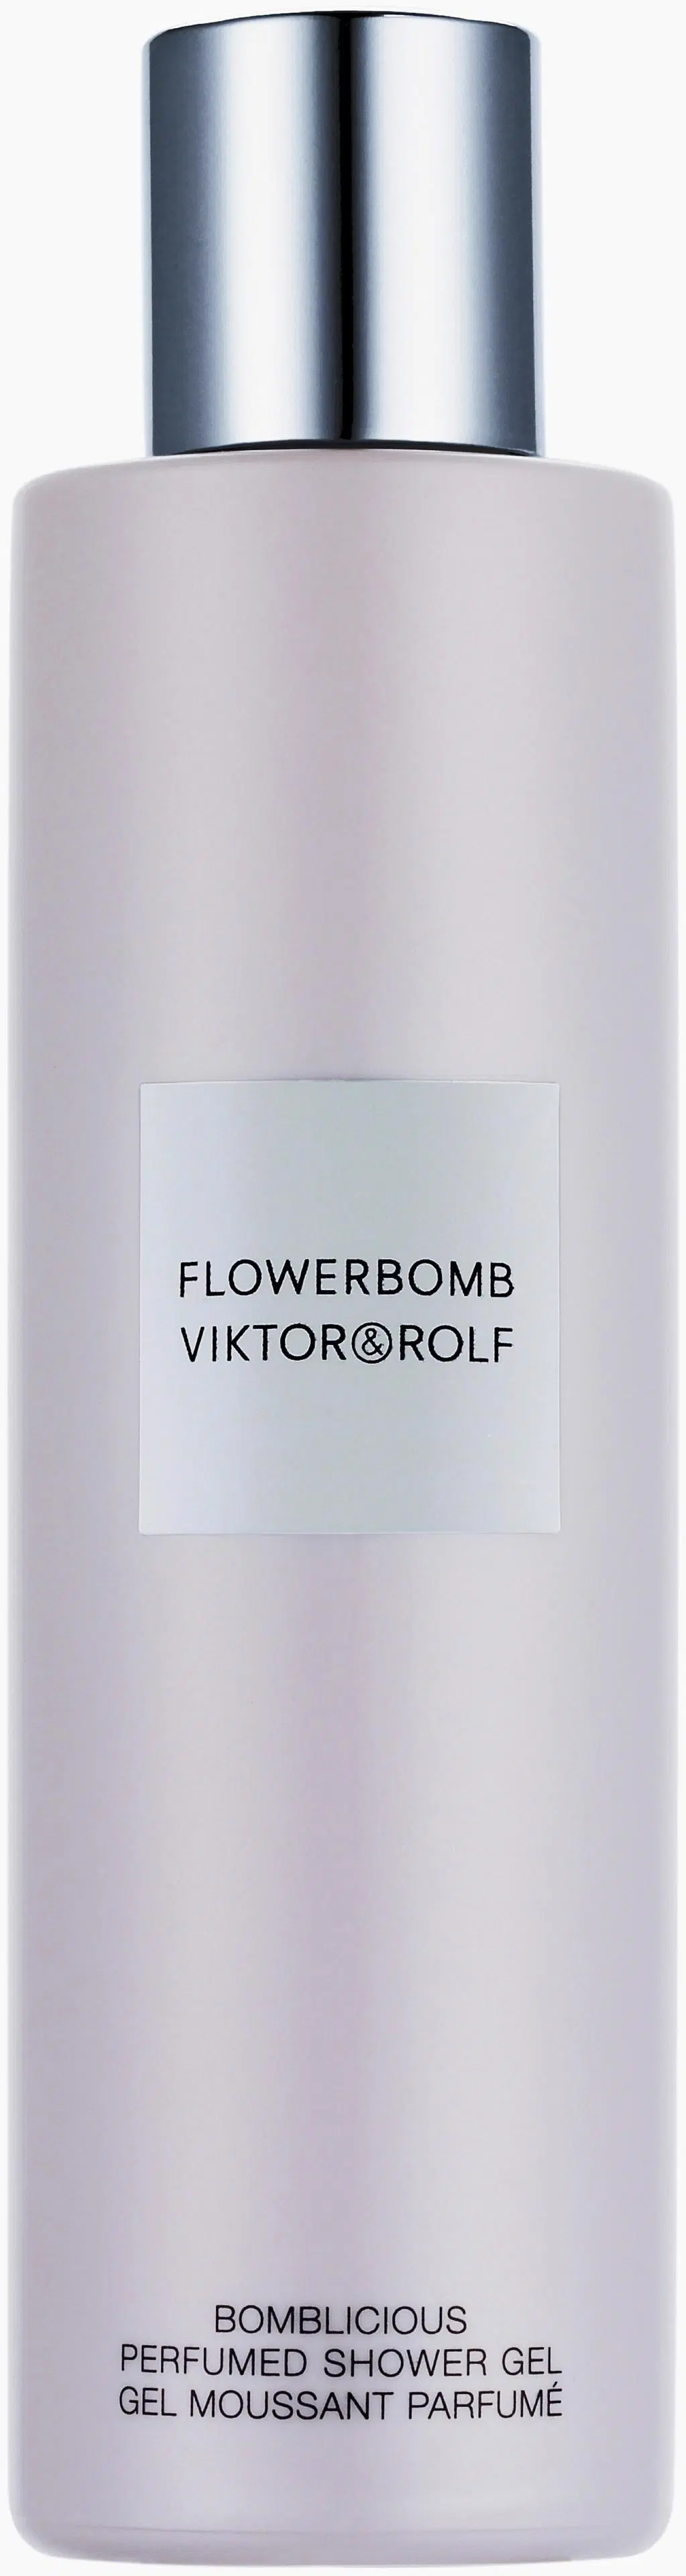 Viktor&Rolf Flowerbomb Shower Gel suihkugeeli 200 ml